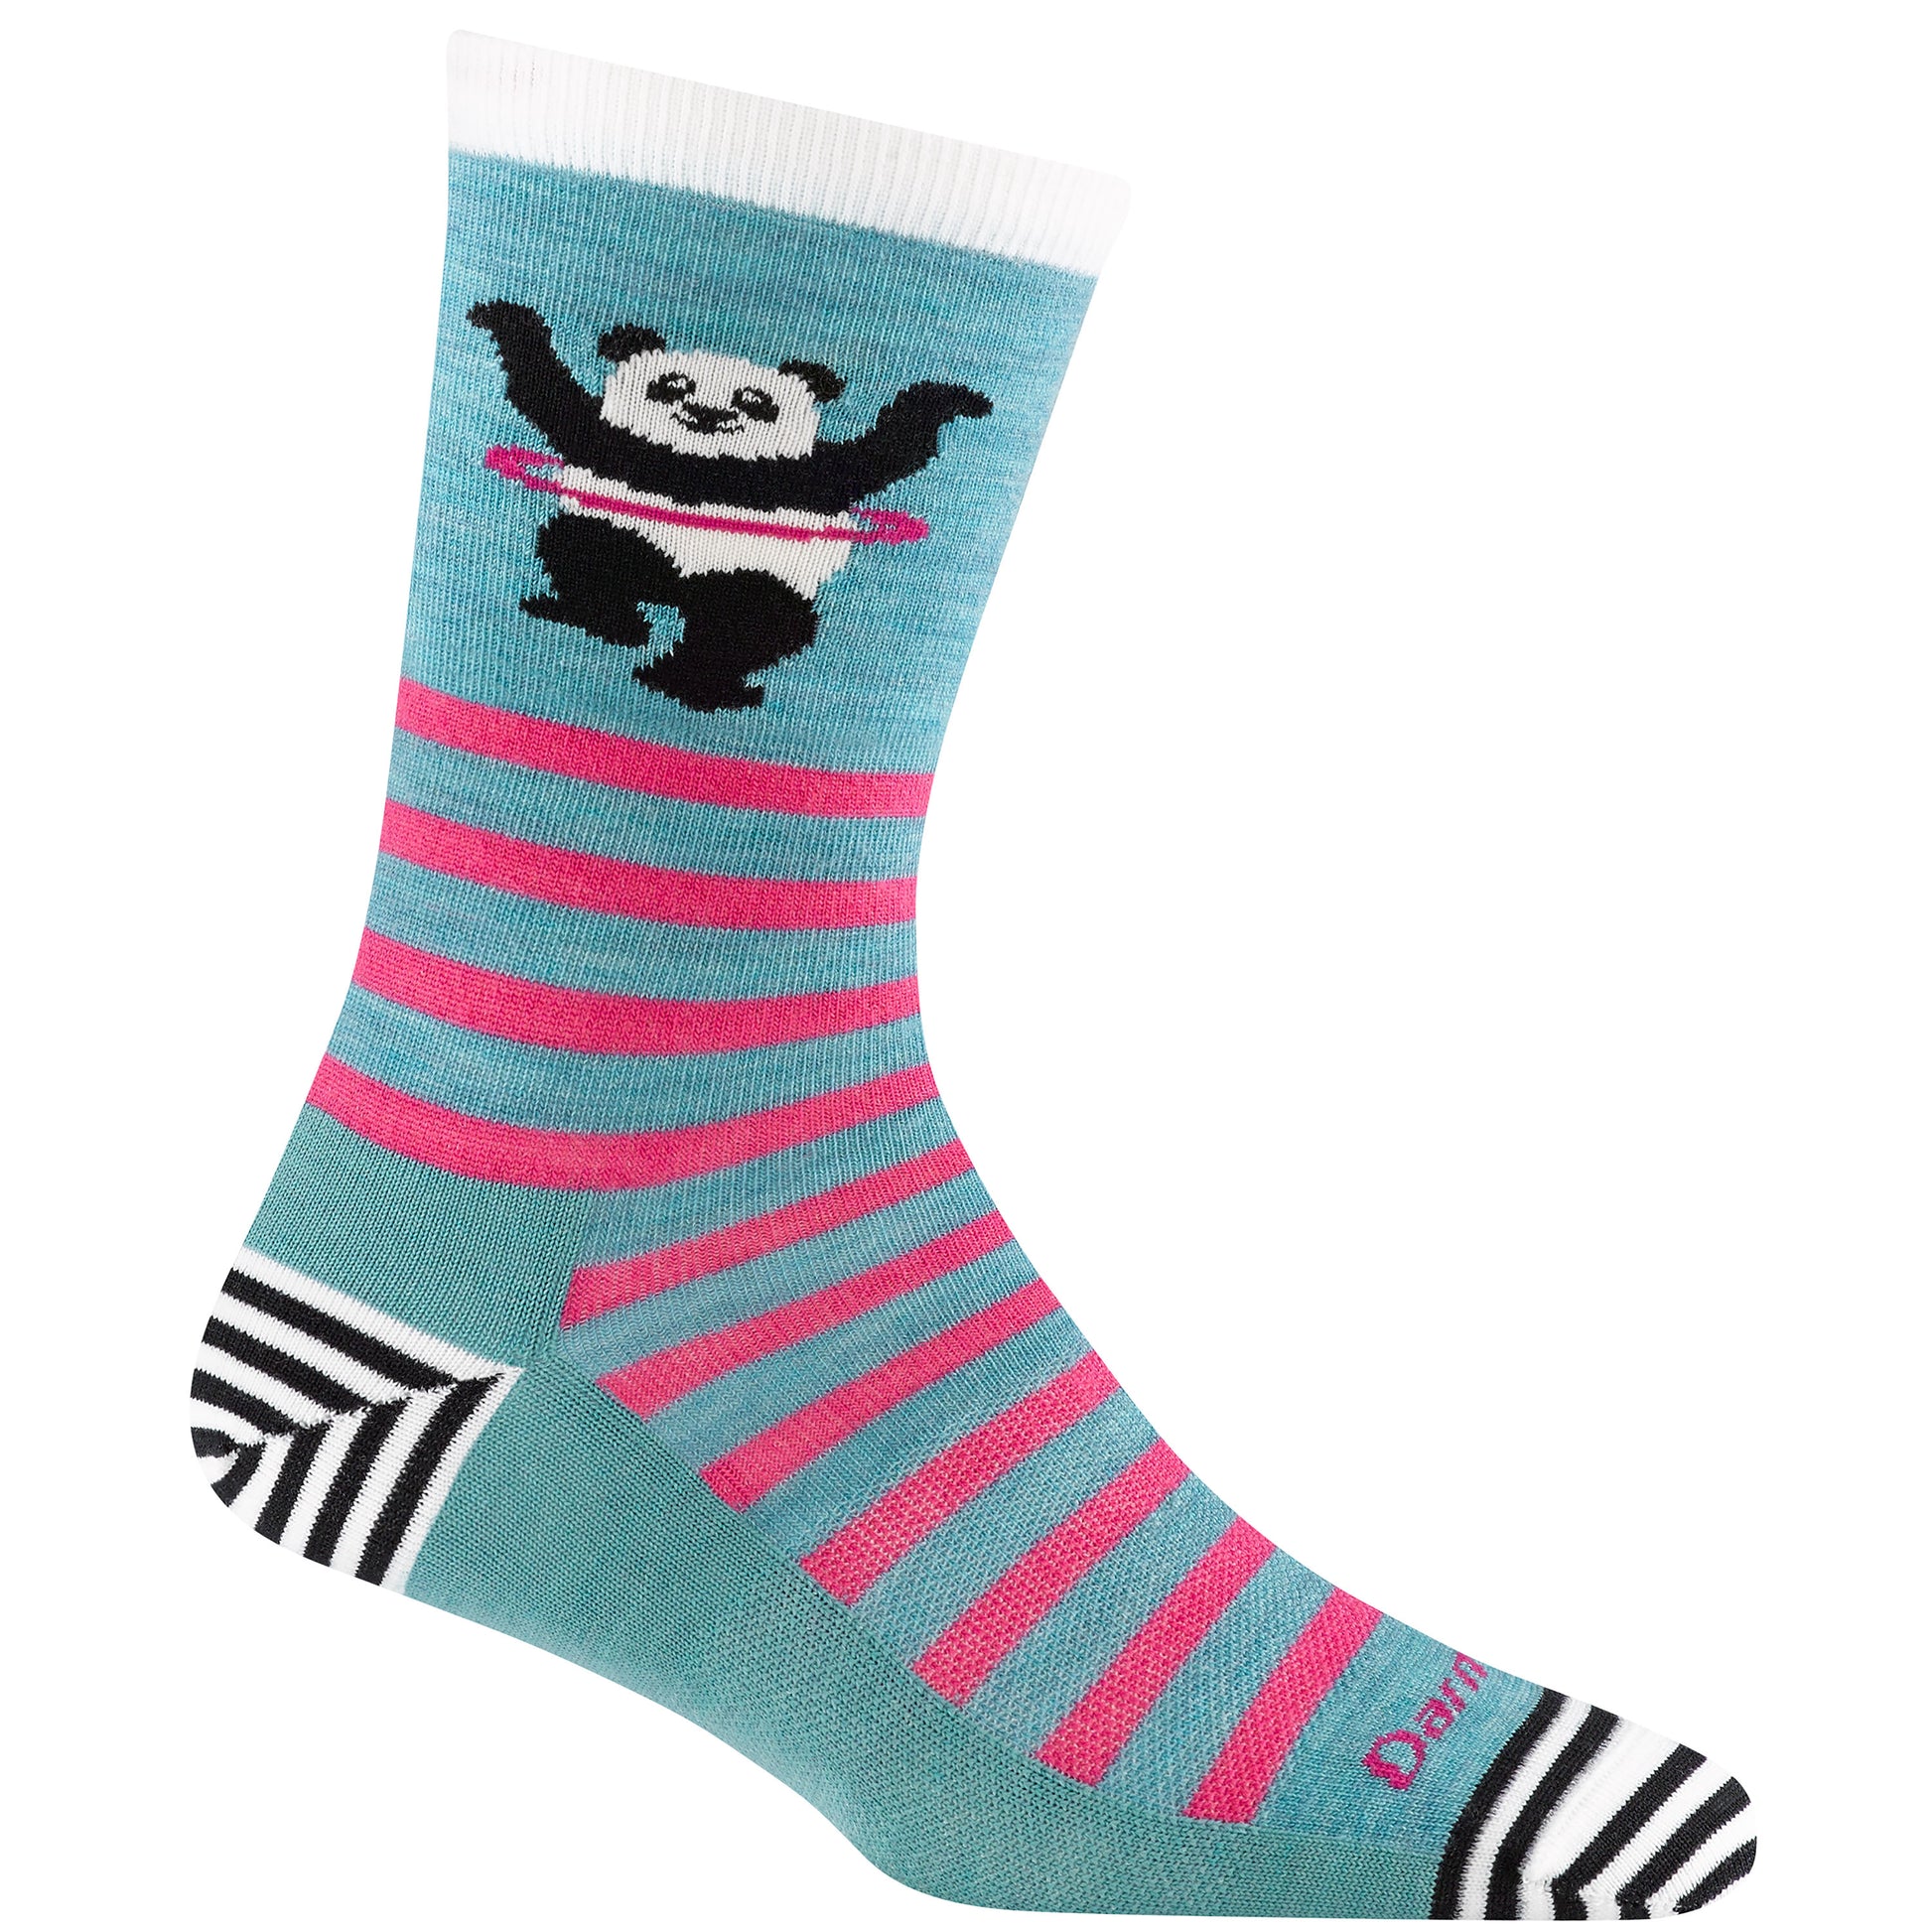 Darn tough women's 6037 lagoon socks with panda dancing